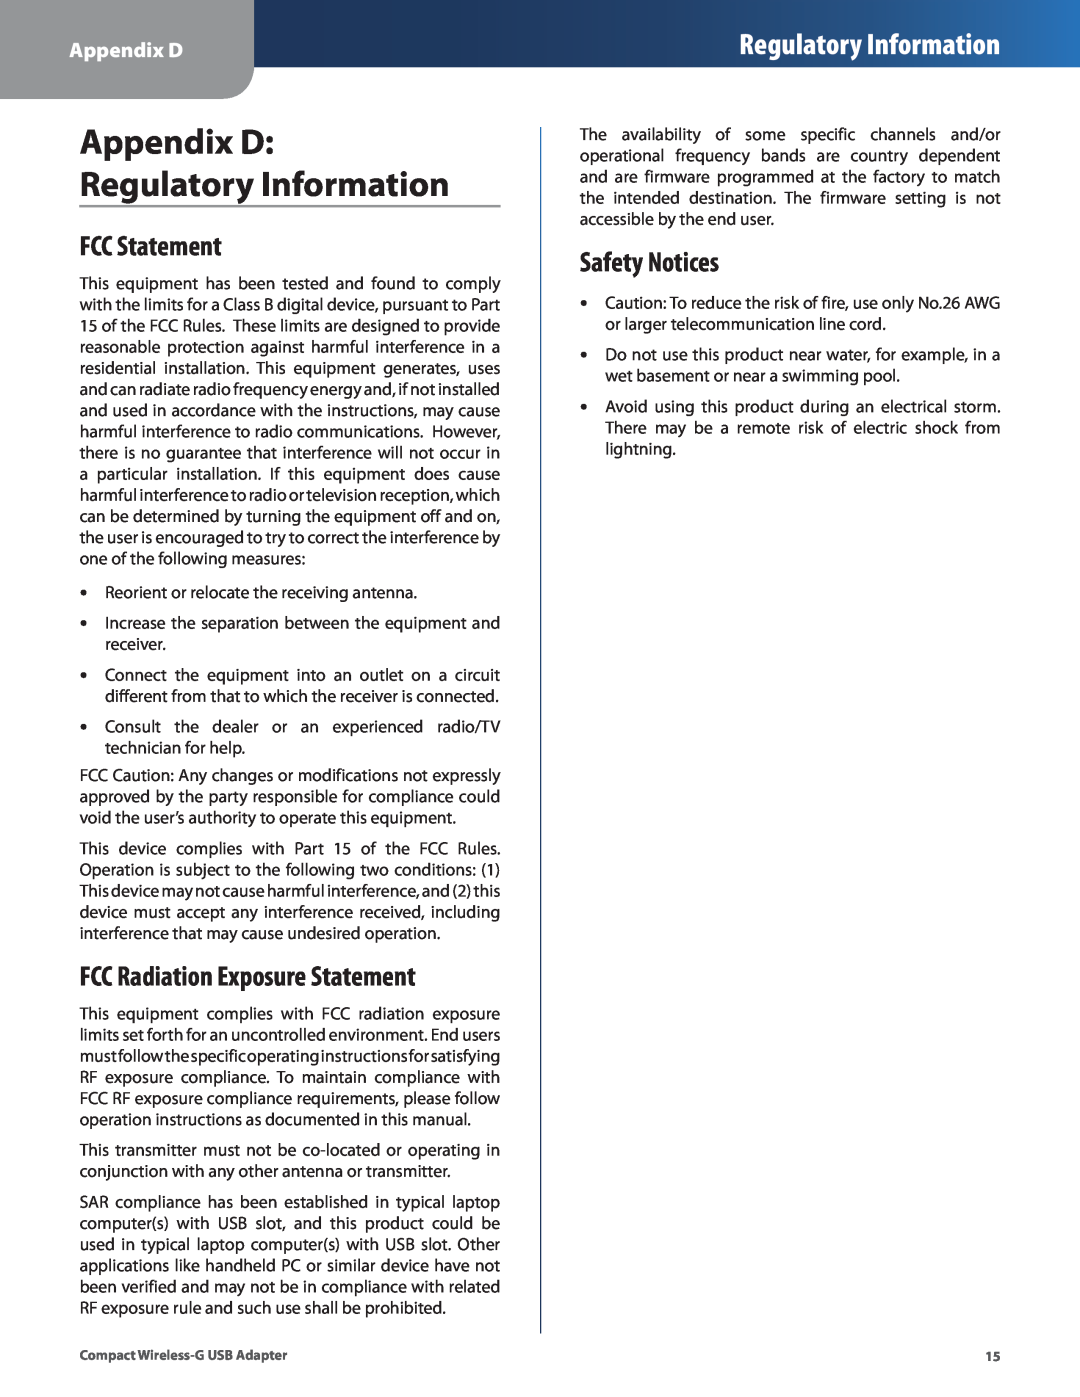 Cisco Systems WUSB54GC Appendix D Regulatory Information, FCC Statement, FCC Radiation Exposure Statement, Safety Notices 